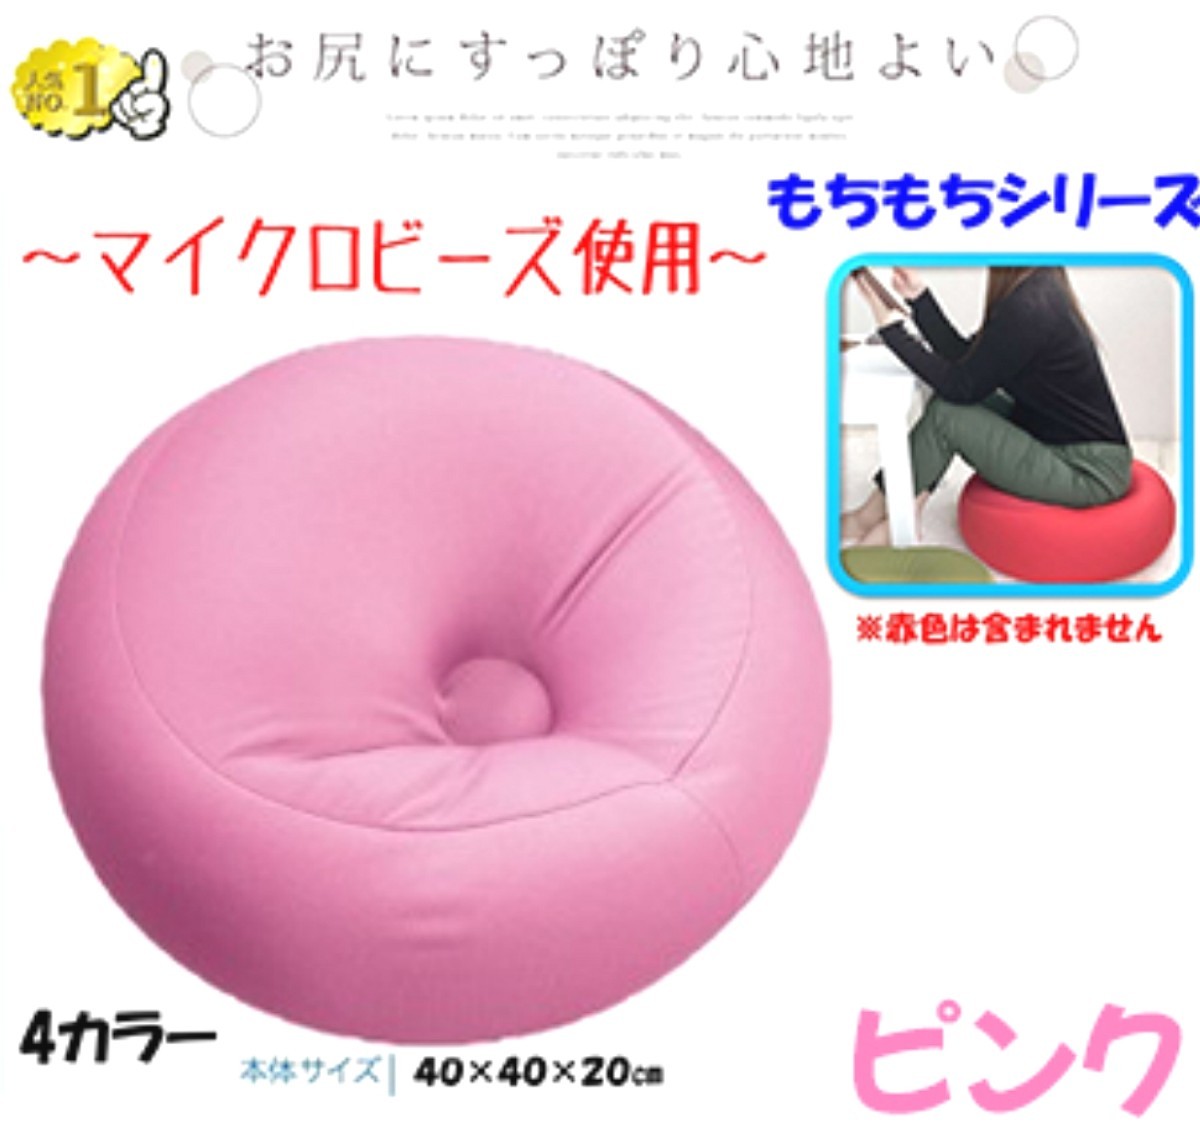 KELLY Kelly раунд подушка микро бисер розовый сиденье "zaisu" диван подушка наличие 1